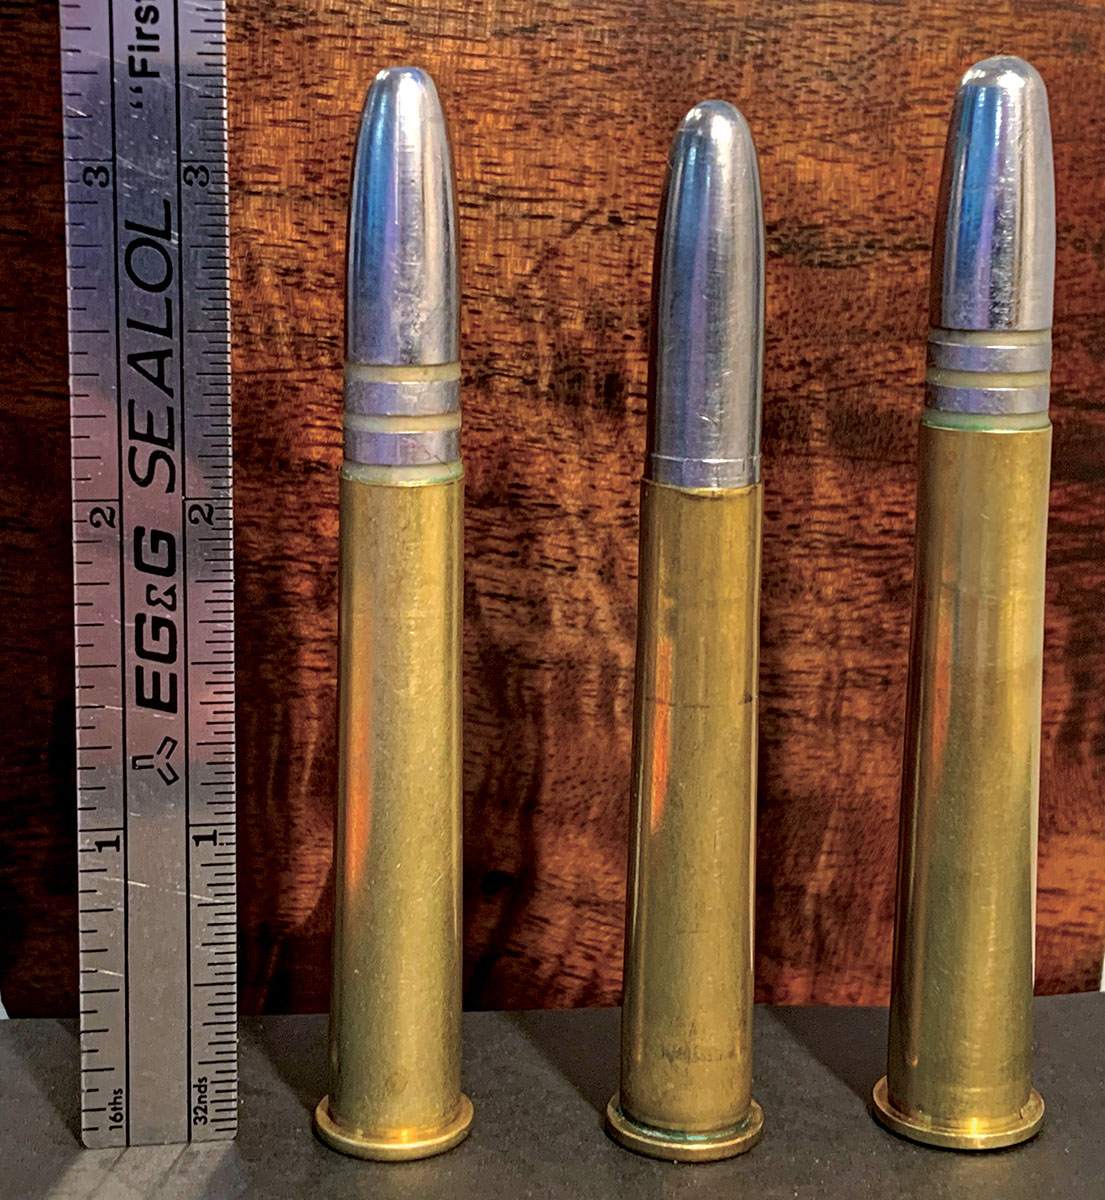 .35-40 Maynard – 340-grain Lewis bullet, .35-40 Maynard – Lucas cartridge with 340-grain grooveless bullet and a .38-50 Remington Hepburn with 367-grain Jones “Money” bullet.